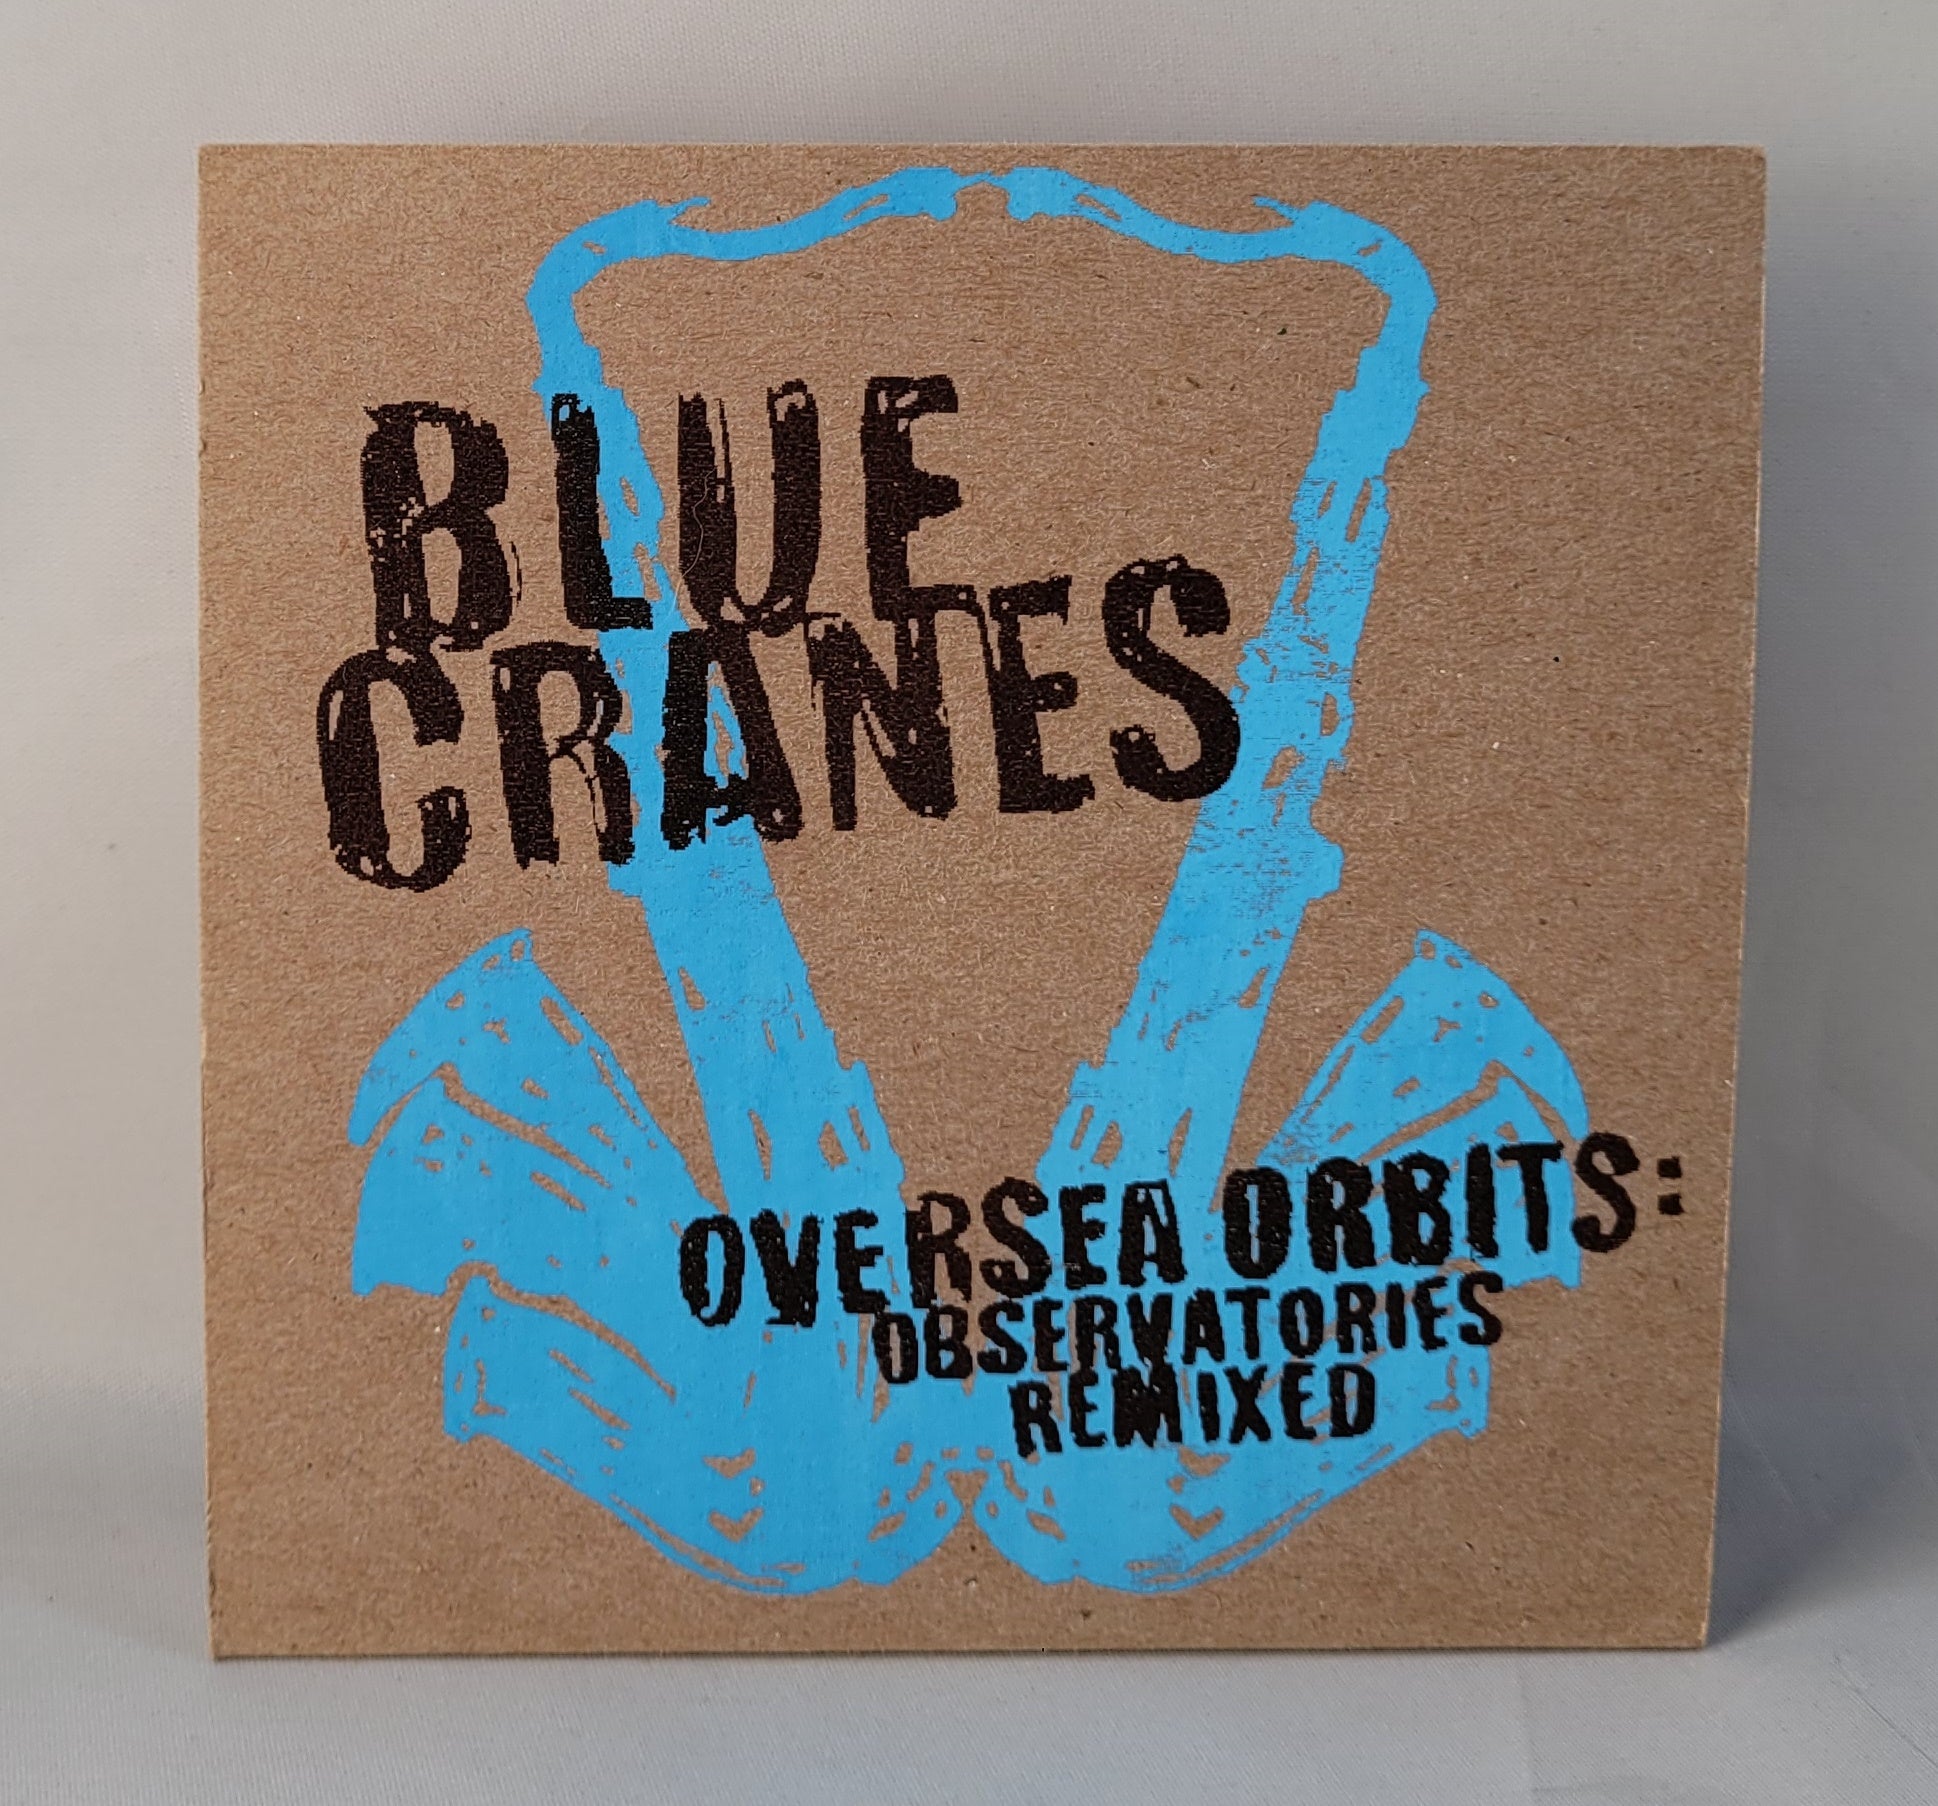 Blue Cranes - Oversea Orbits: Observatories Remixed [CD]